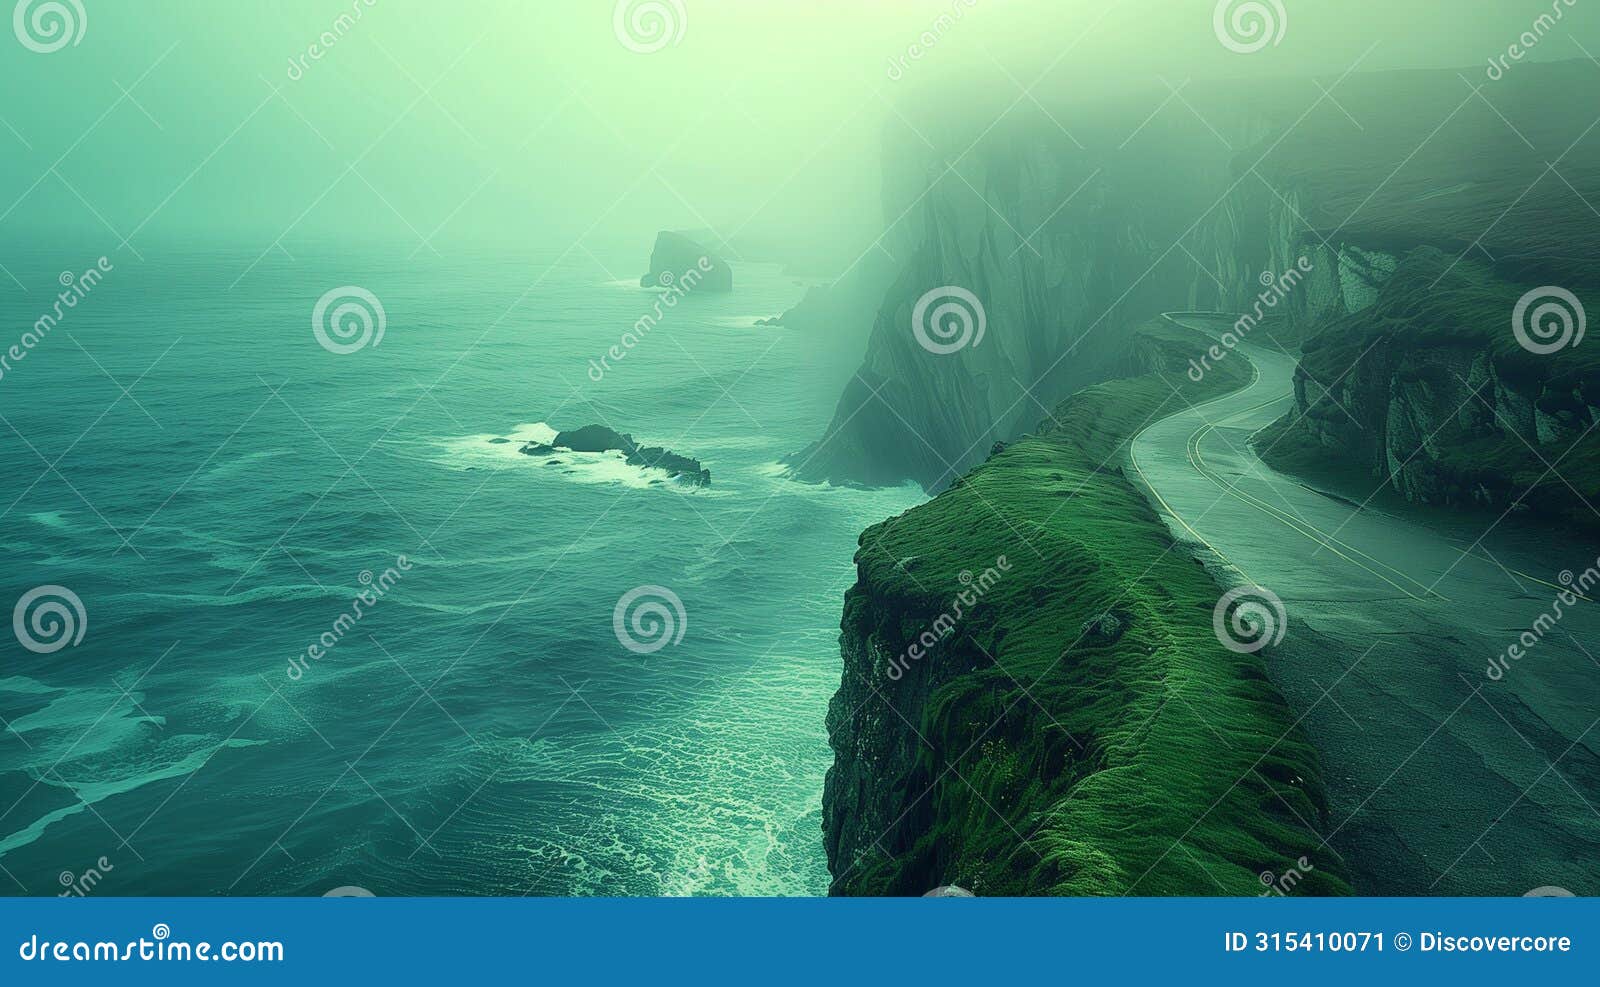 coastal cliffside road in fog: mystical ocean drive with lush greenery